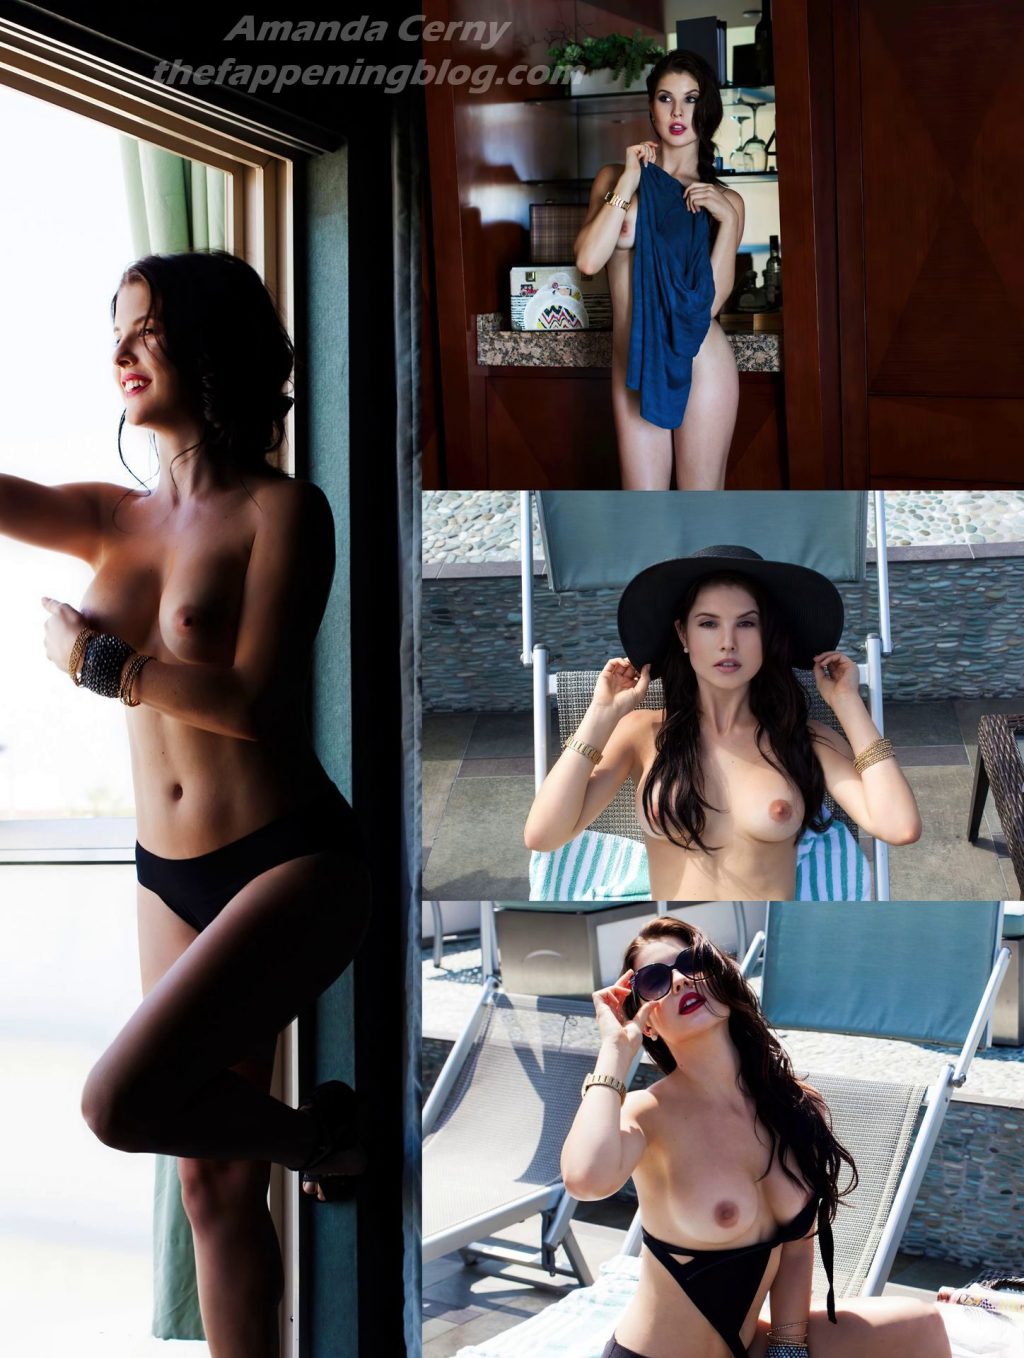 Amanda Cerny Nude Photos (12 images) - Nude celebrity